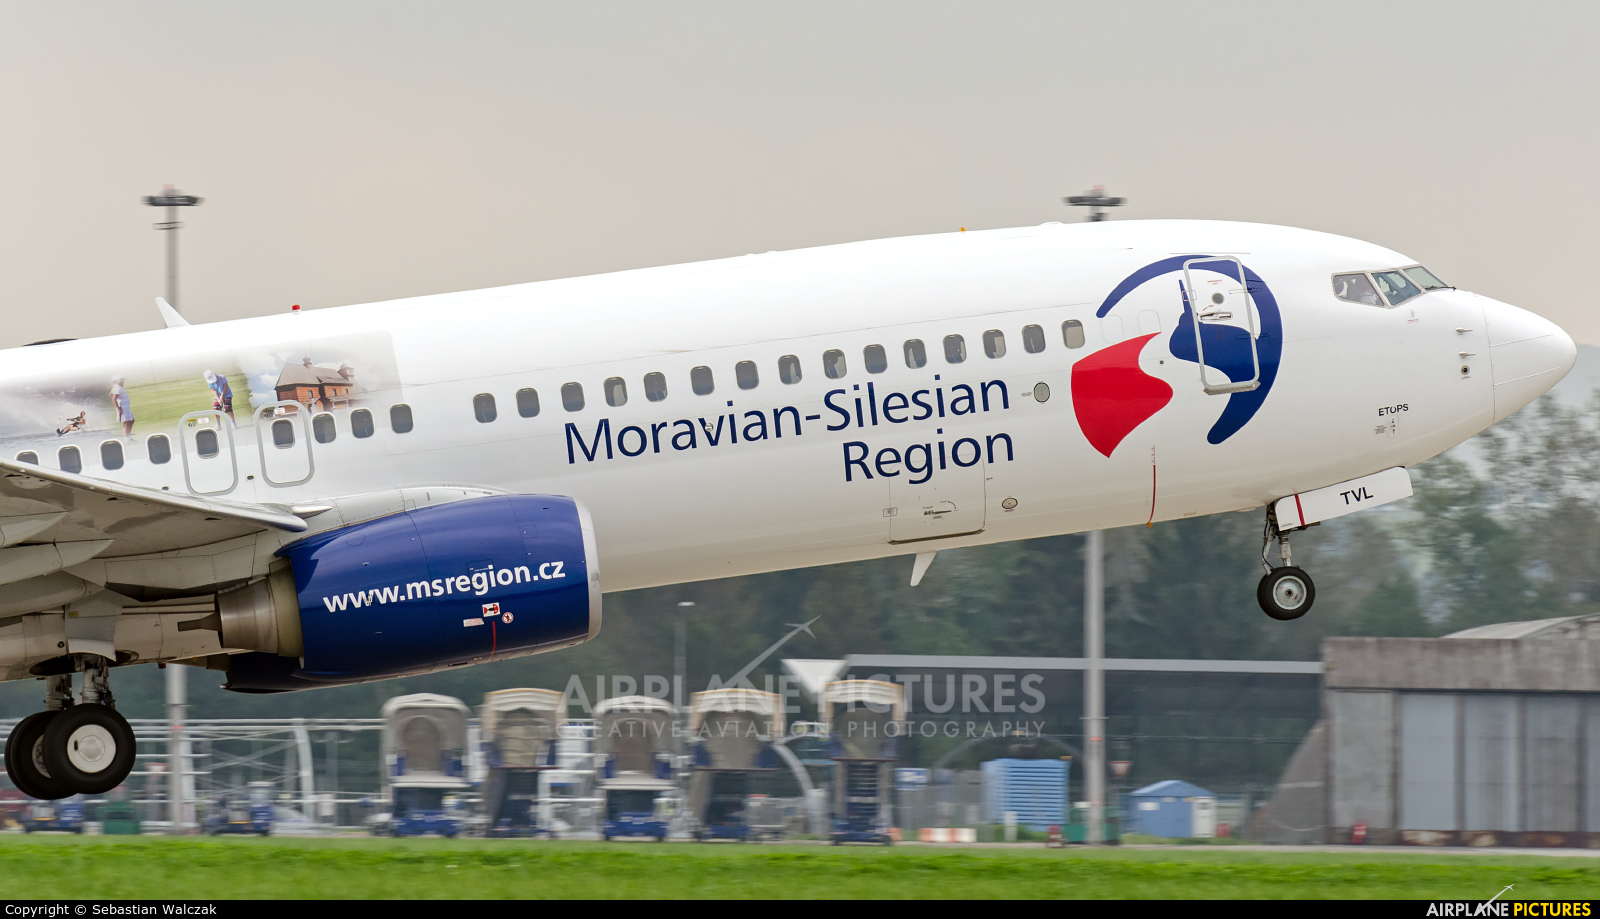 Travel Service OK-TVL aircraft at Ostrava Mošnov